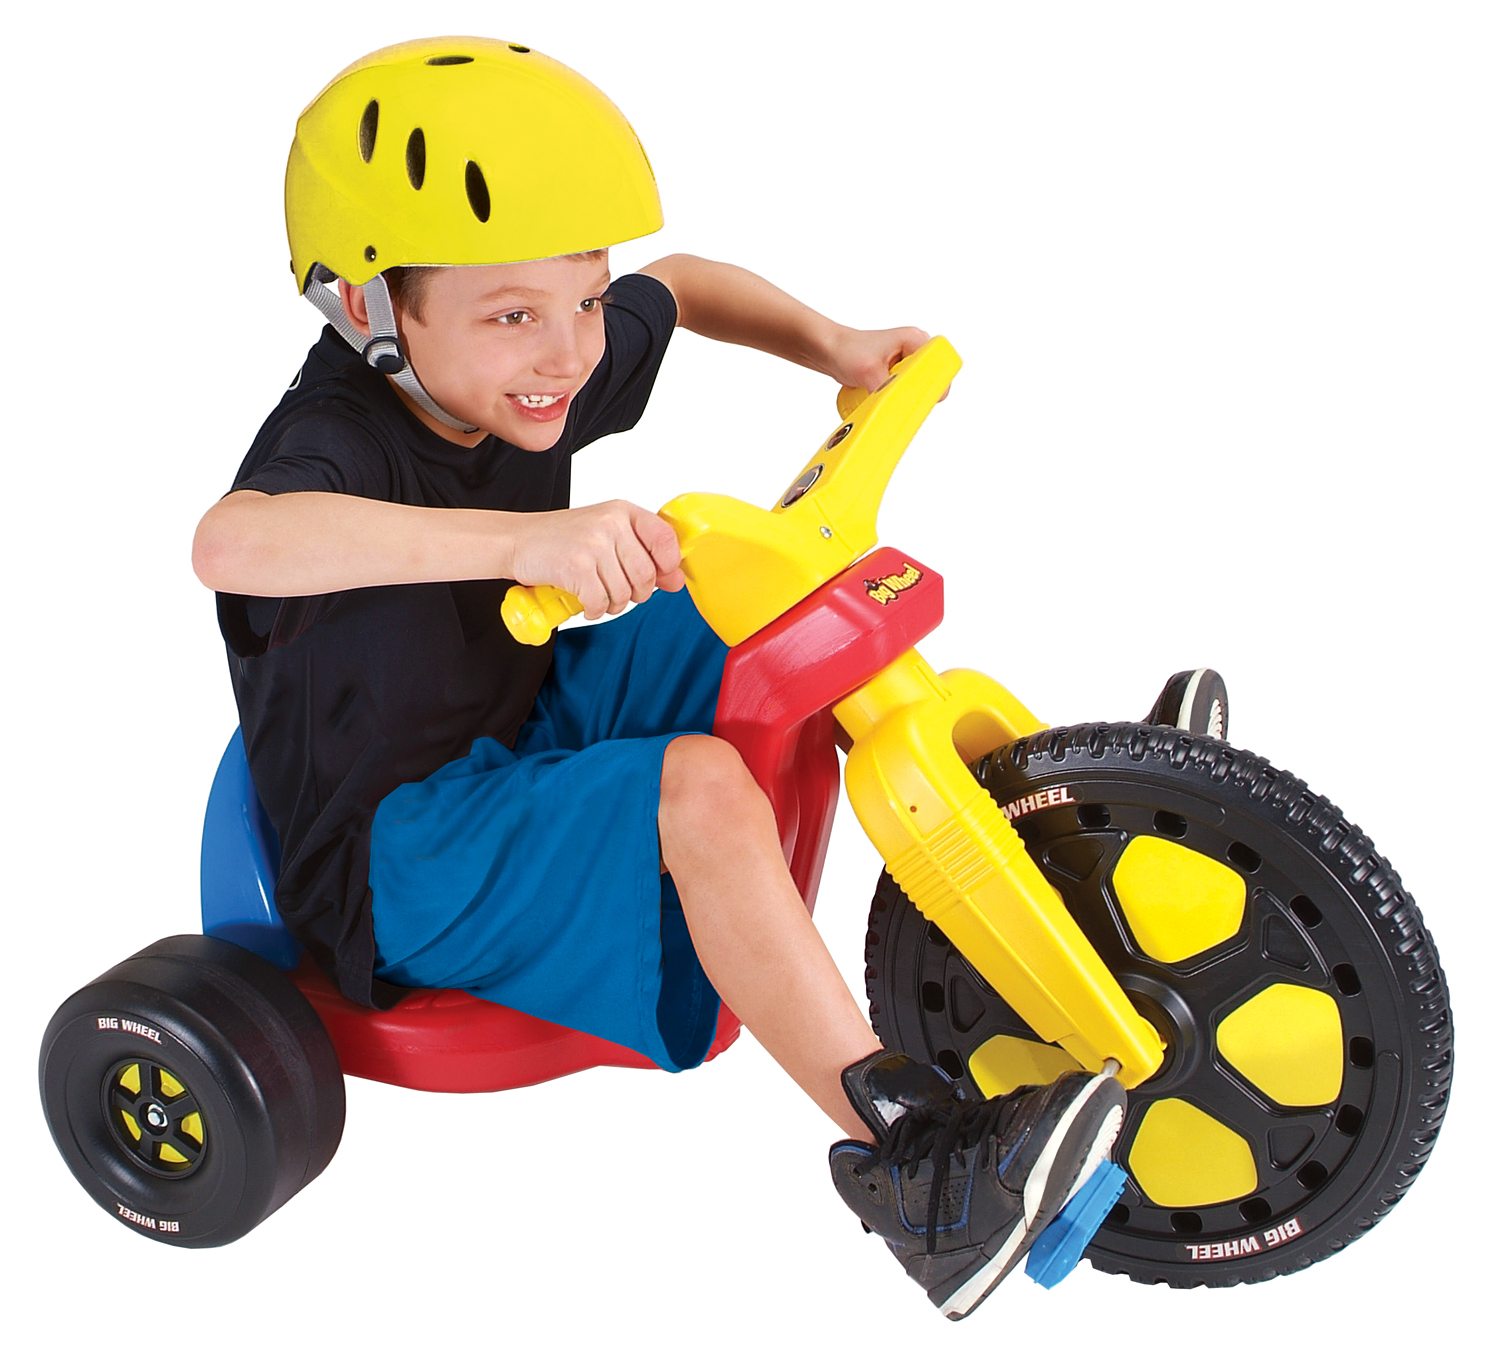 Big Wheel Bike For Kids